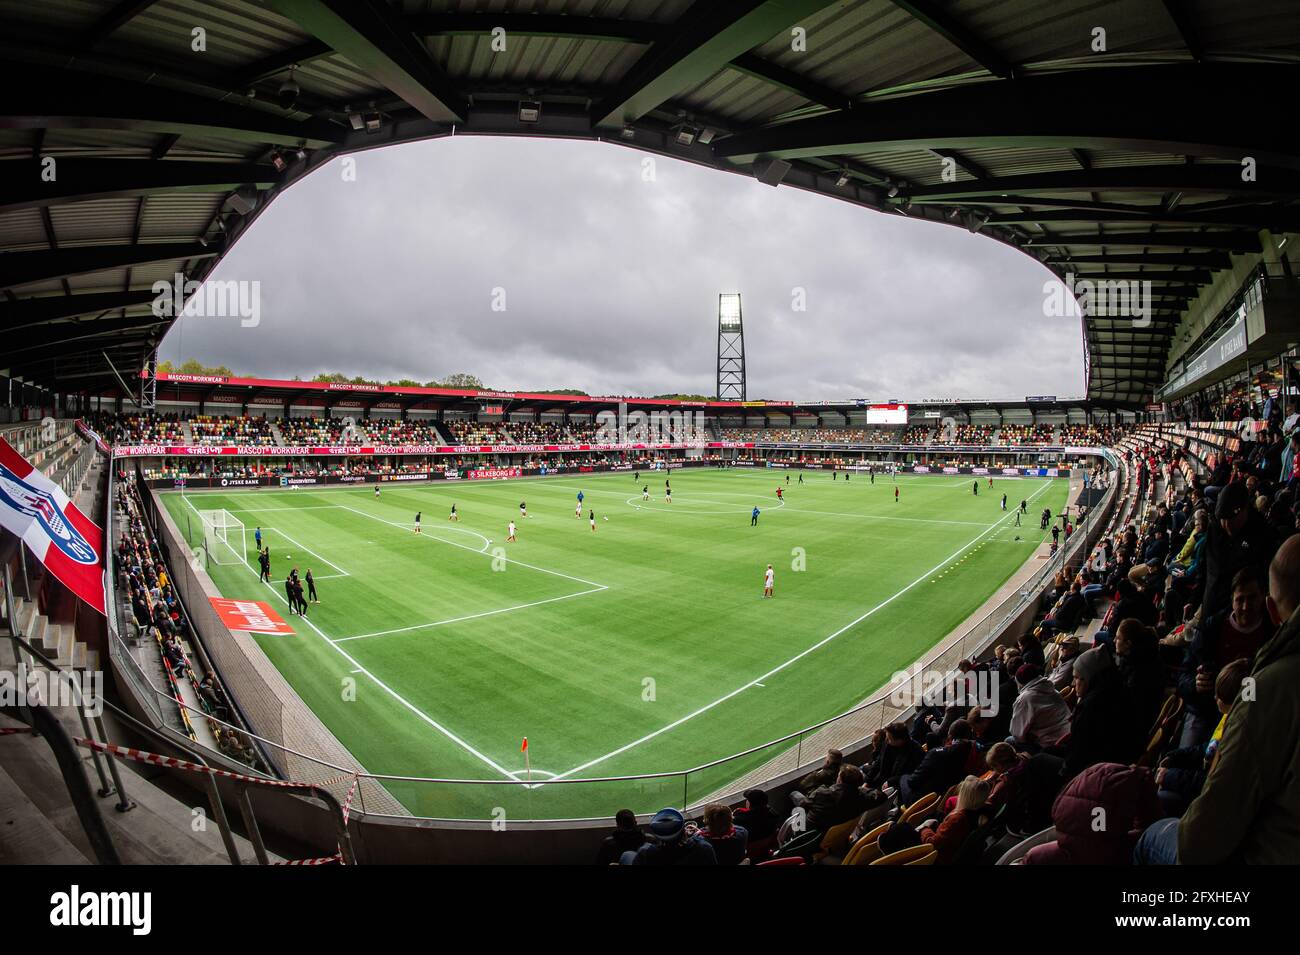 Silkeborg, Denmark. 26th May, 2021. The stadium Jysk Park is ready for the  NordicBet Liga match